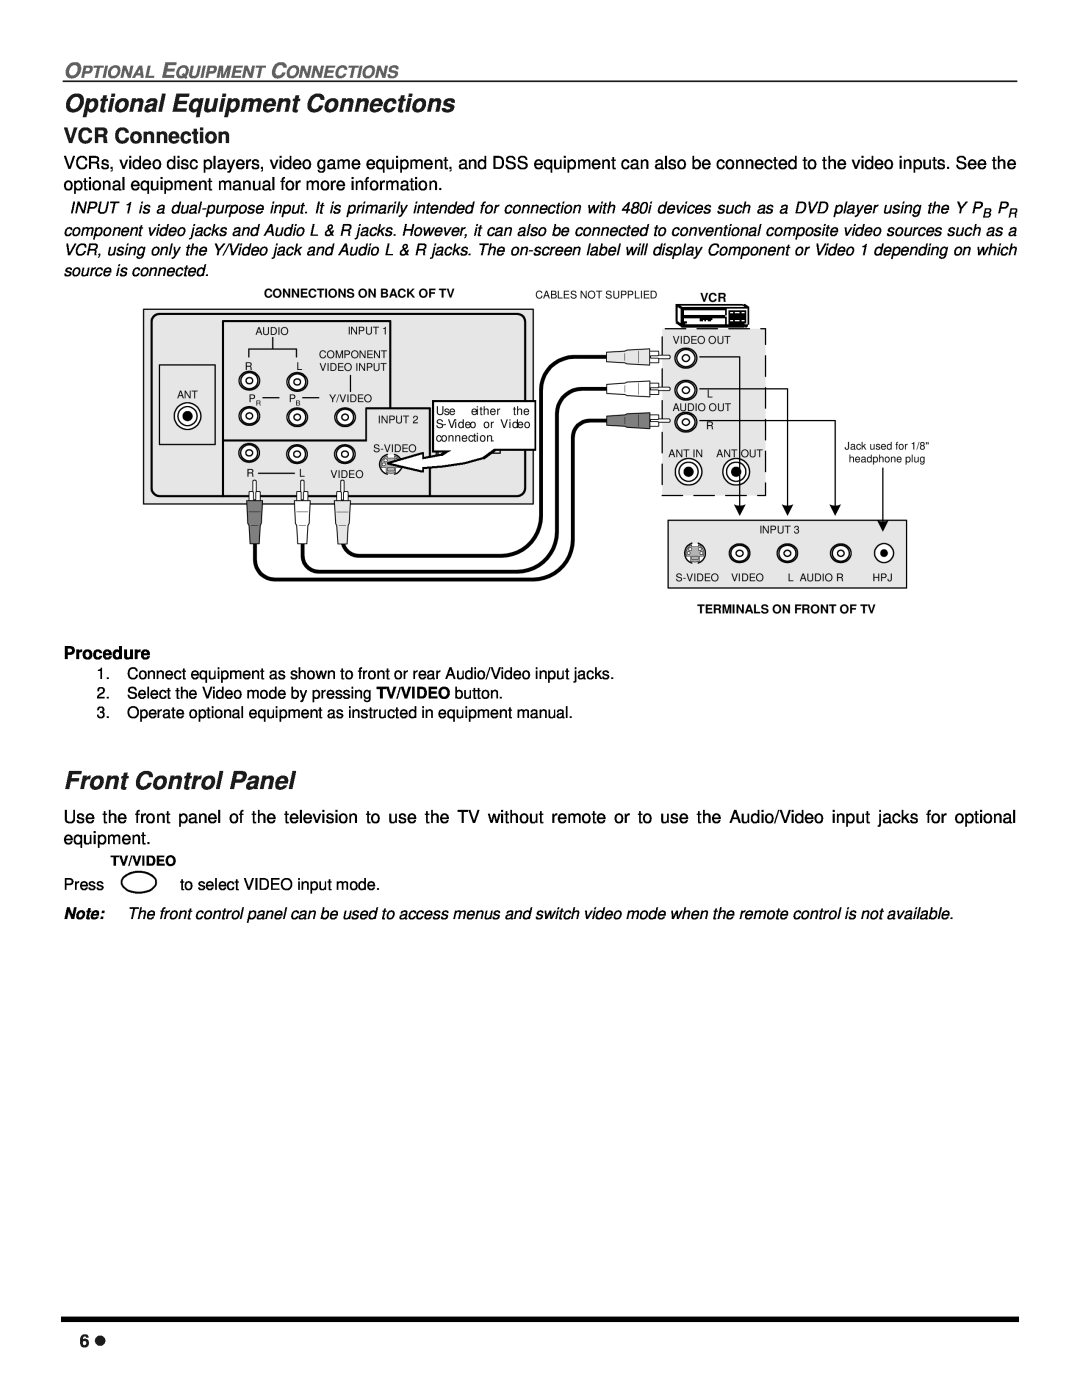 Panasonic CT 27SX12, CT 24SX12 Optional Equipment Connections, Front Control Panel, VCR Connection, Procedure 